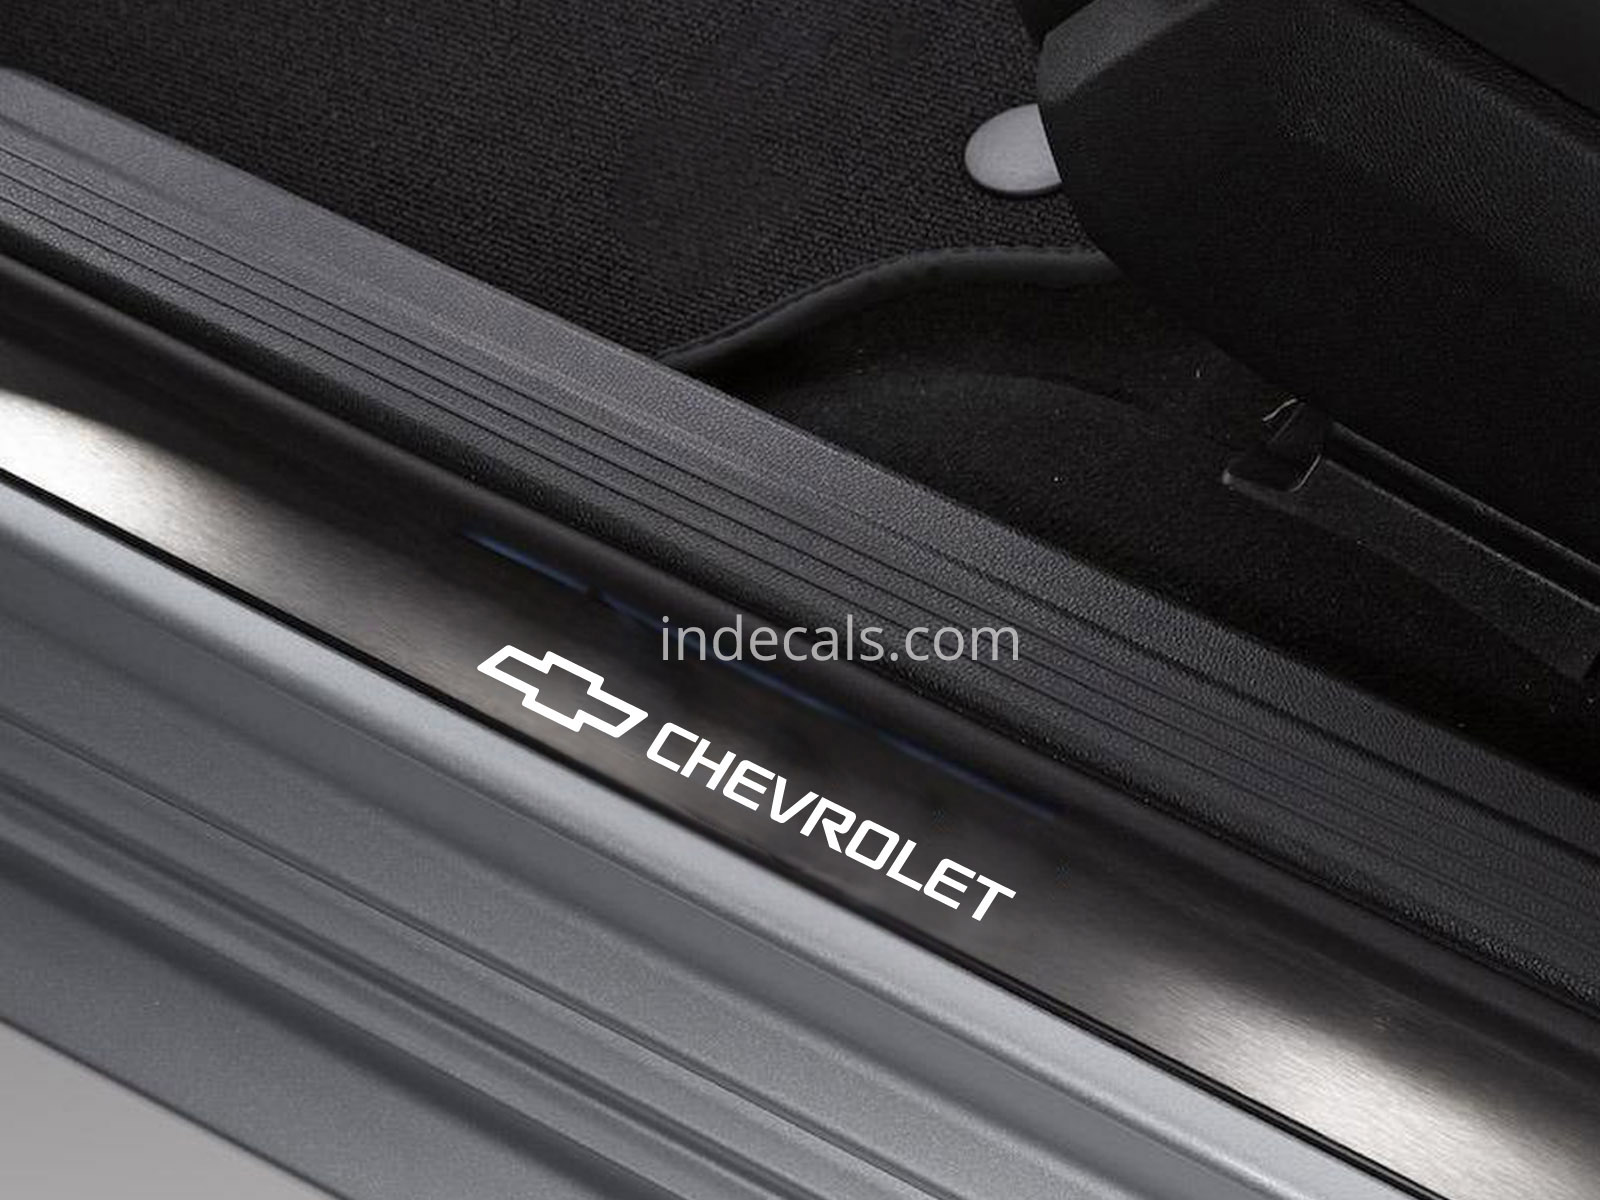 6 x Chevrolet Stickers for Door Sills - White